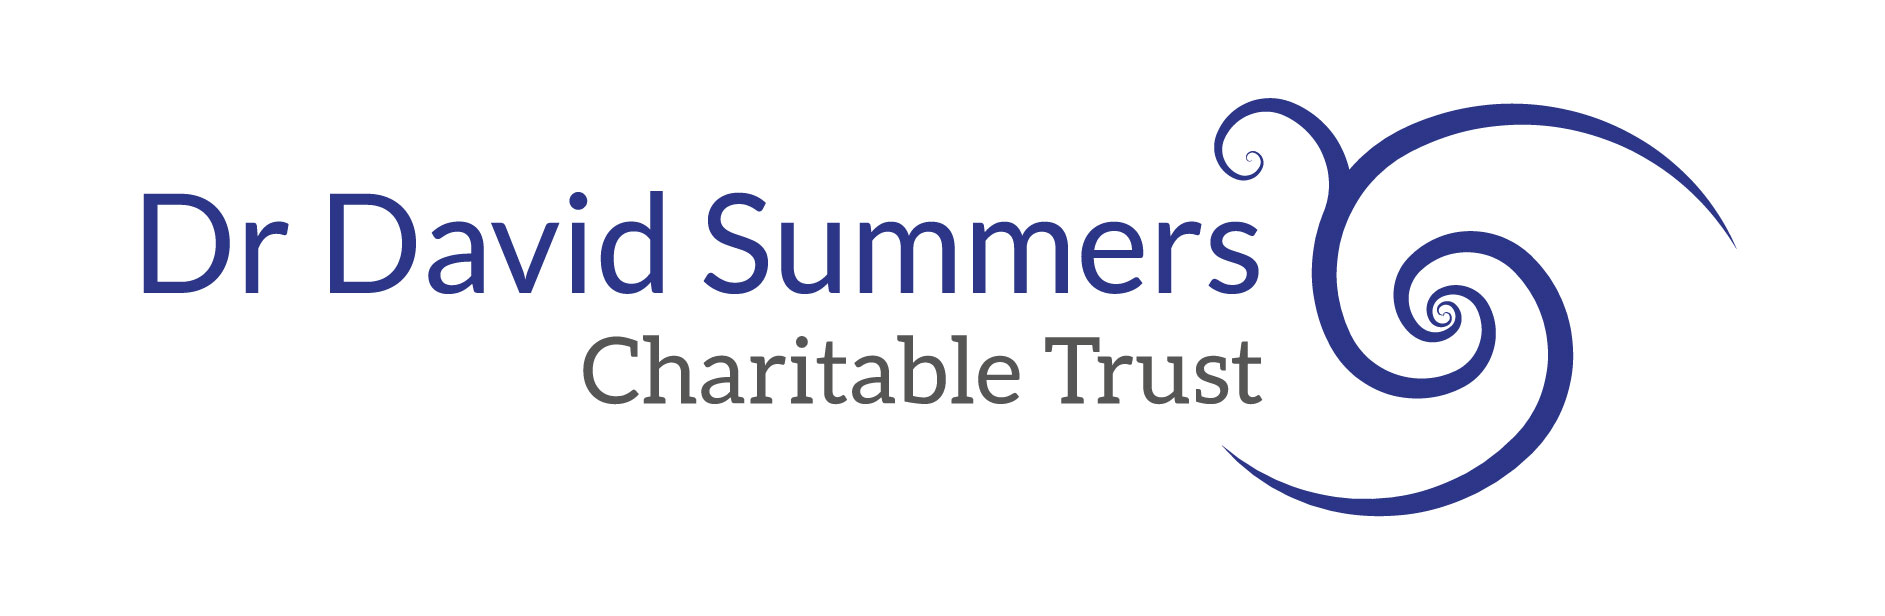 Dr David Summers Charitable Trust